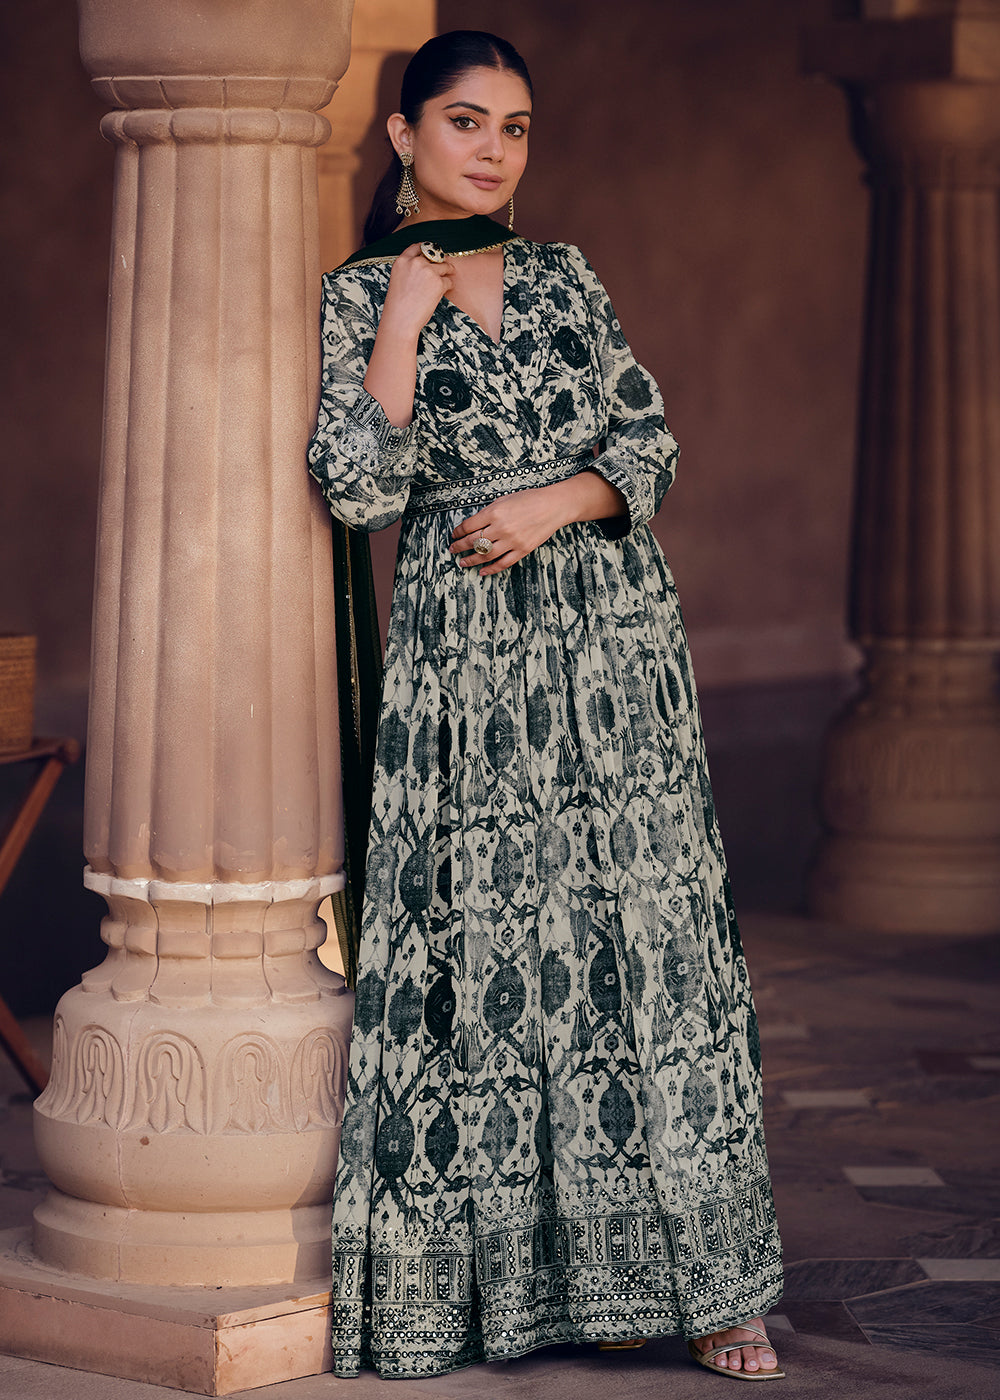 Buy Now Cream Black Digital Printed Designer Anarkali Gown Online in USA, UK, Australia, New Zealand, Canada & Worldwide at Empress Clothing. 